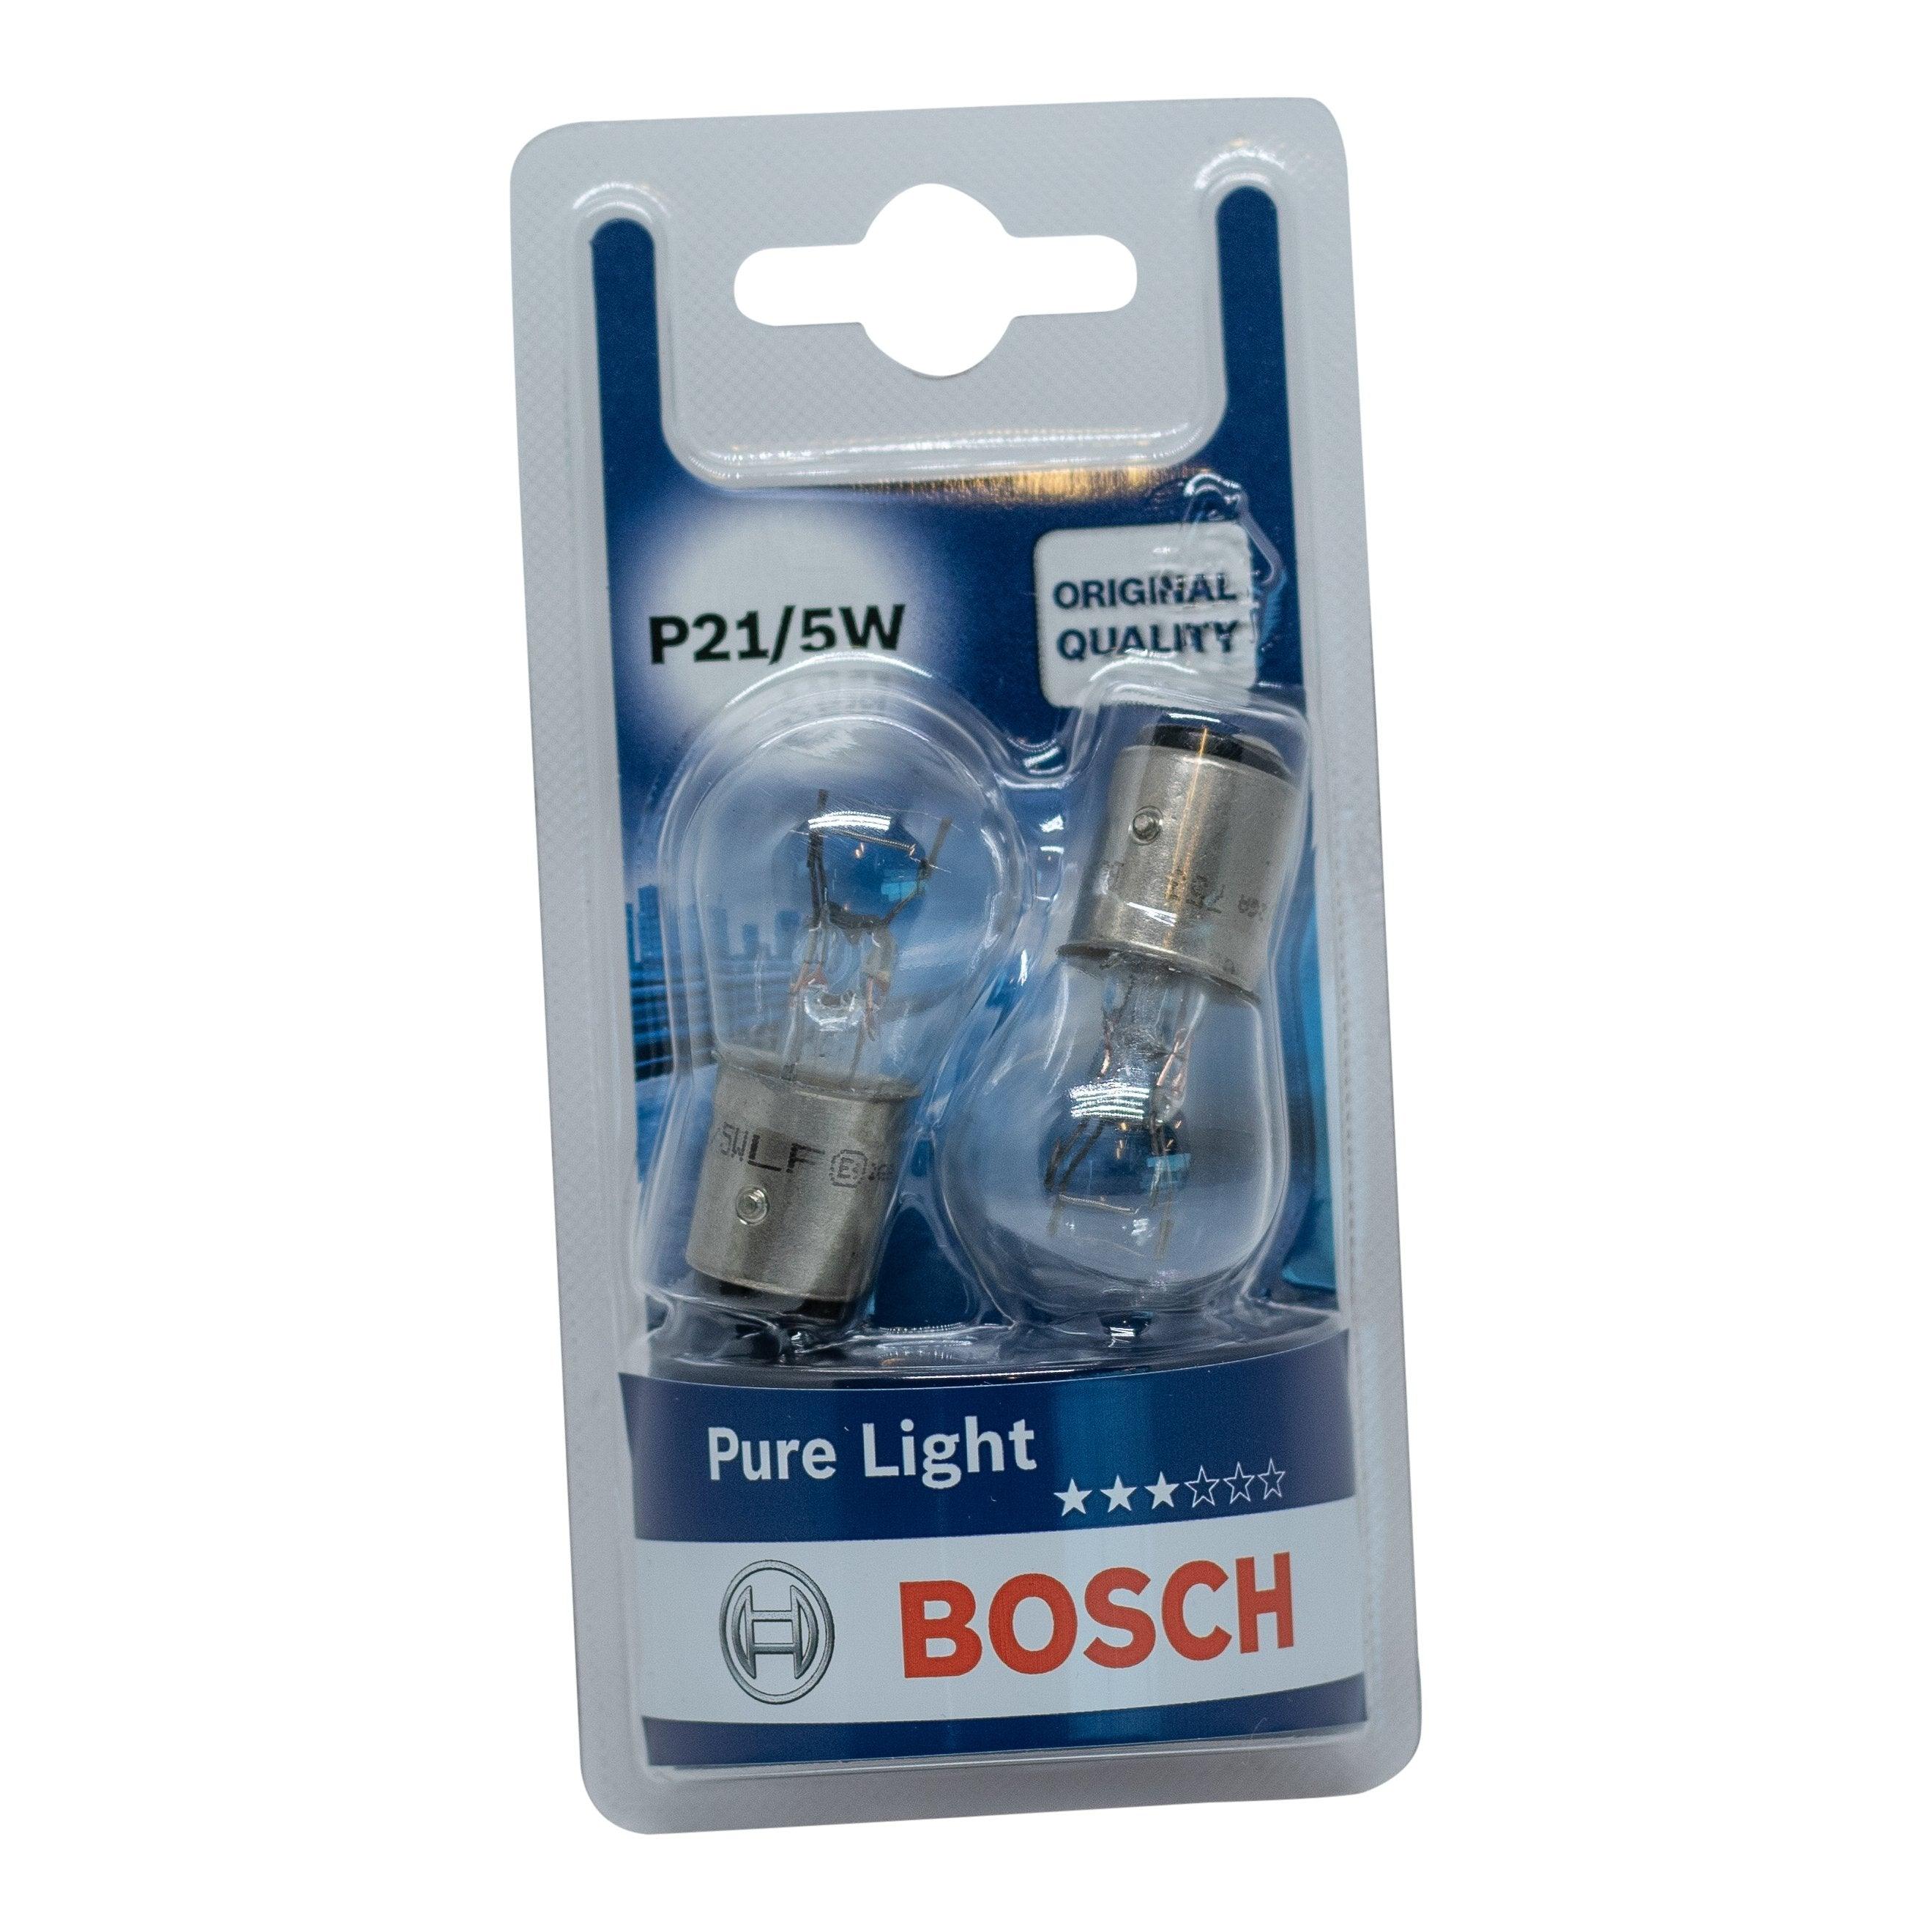 Bosch Pure Light P21/5W